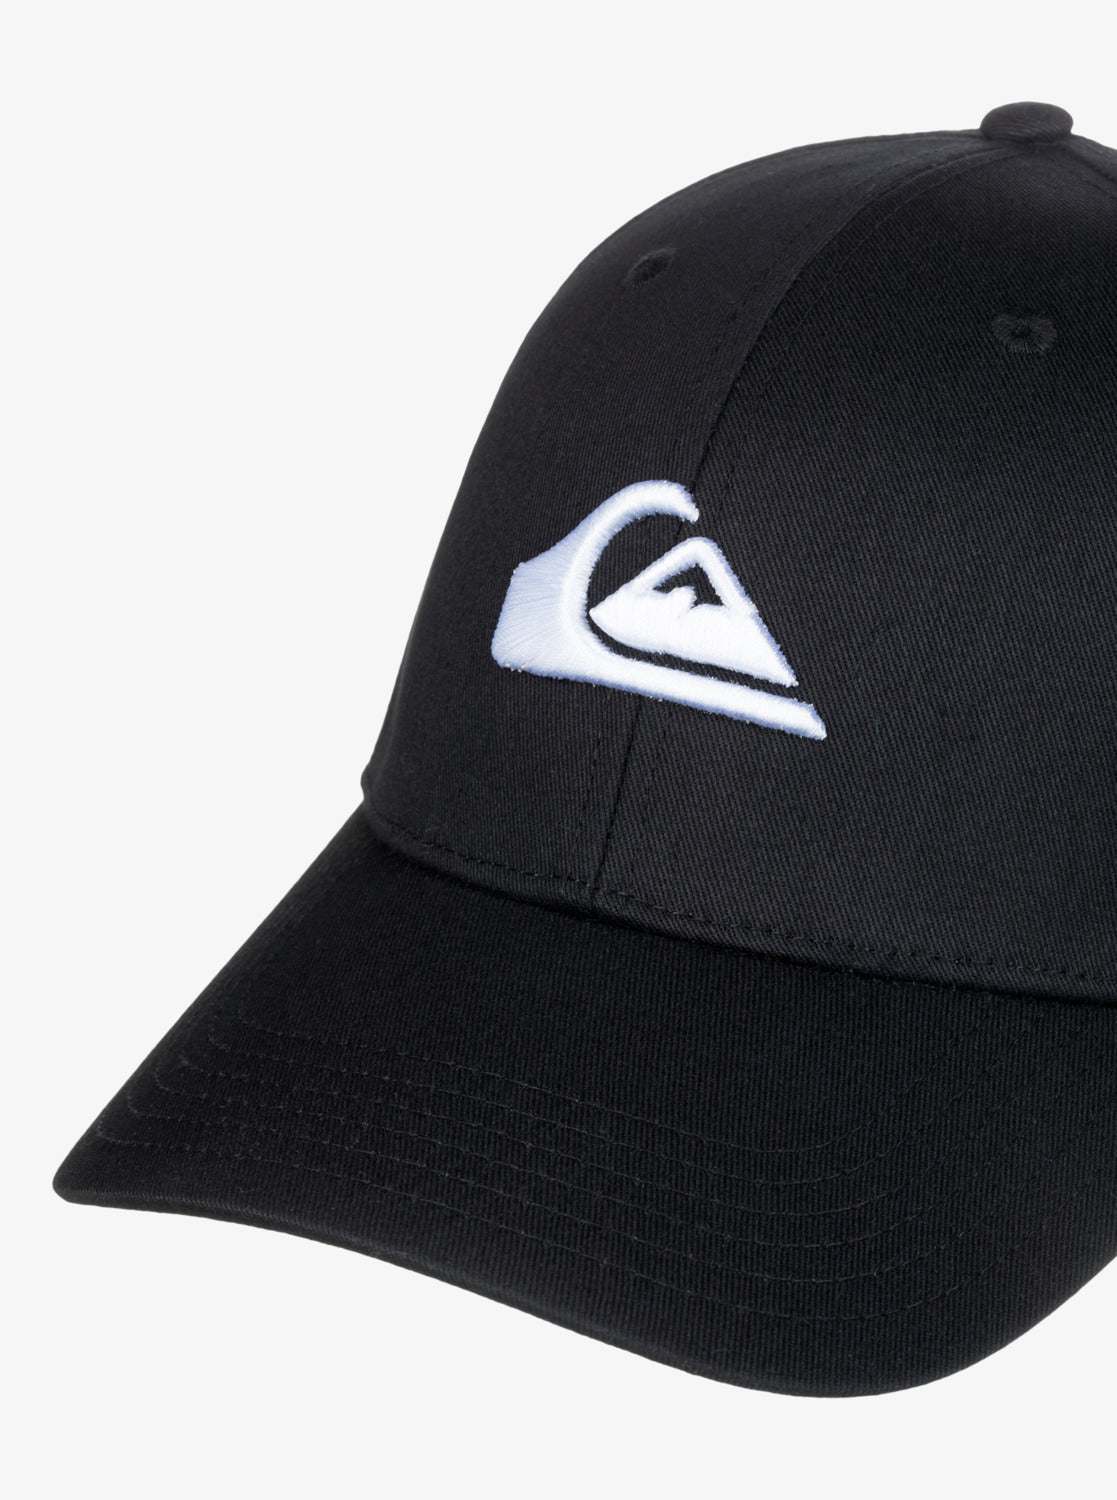 Quiksilver Decades Snapback Cap in Black